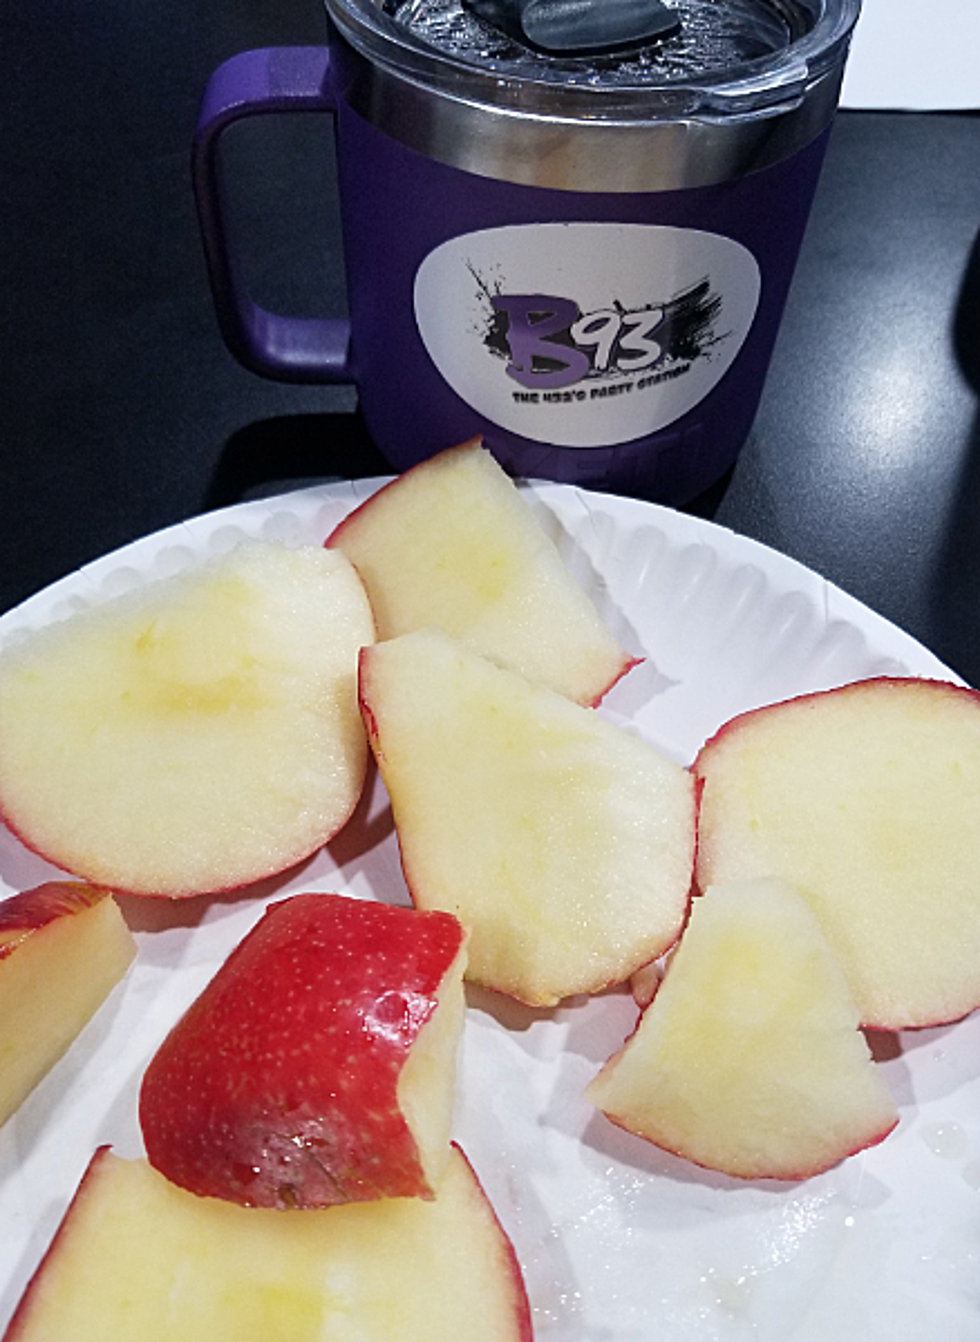 Why I Eat Apples For Breakfast